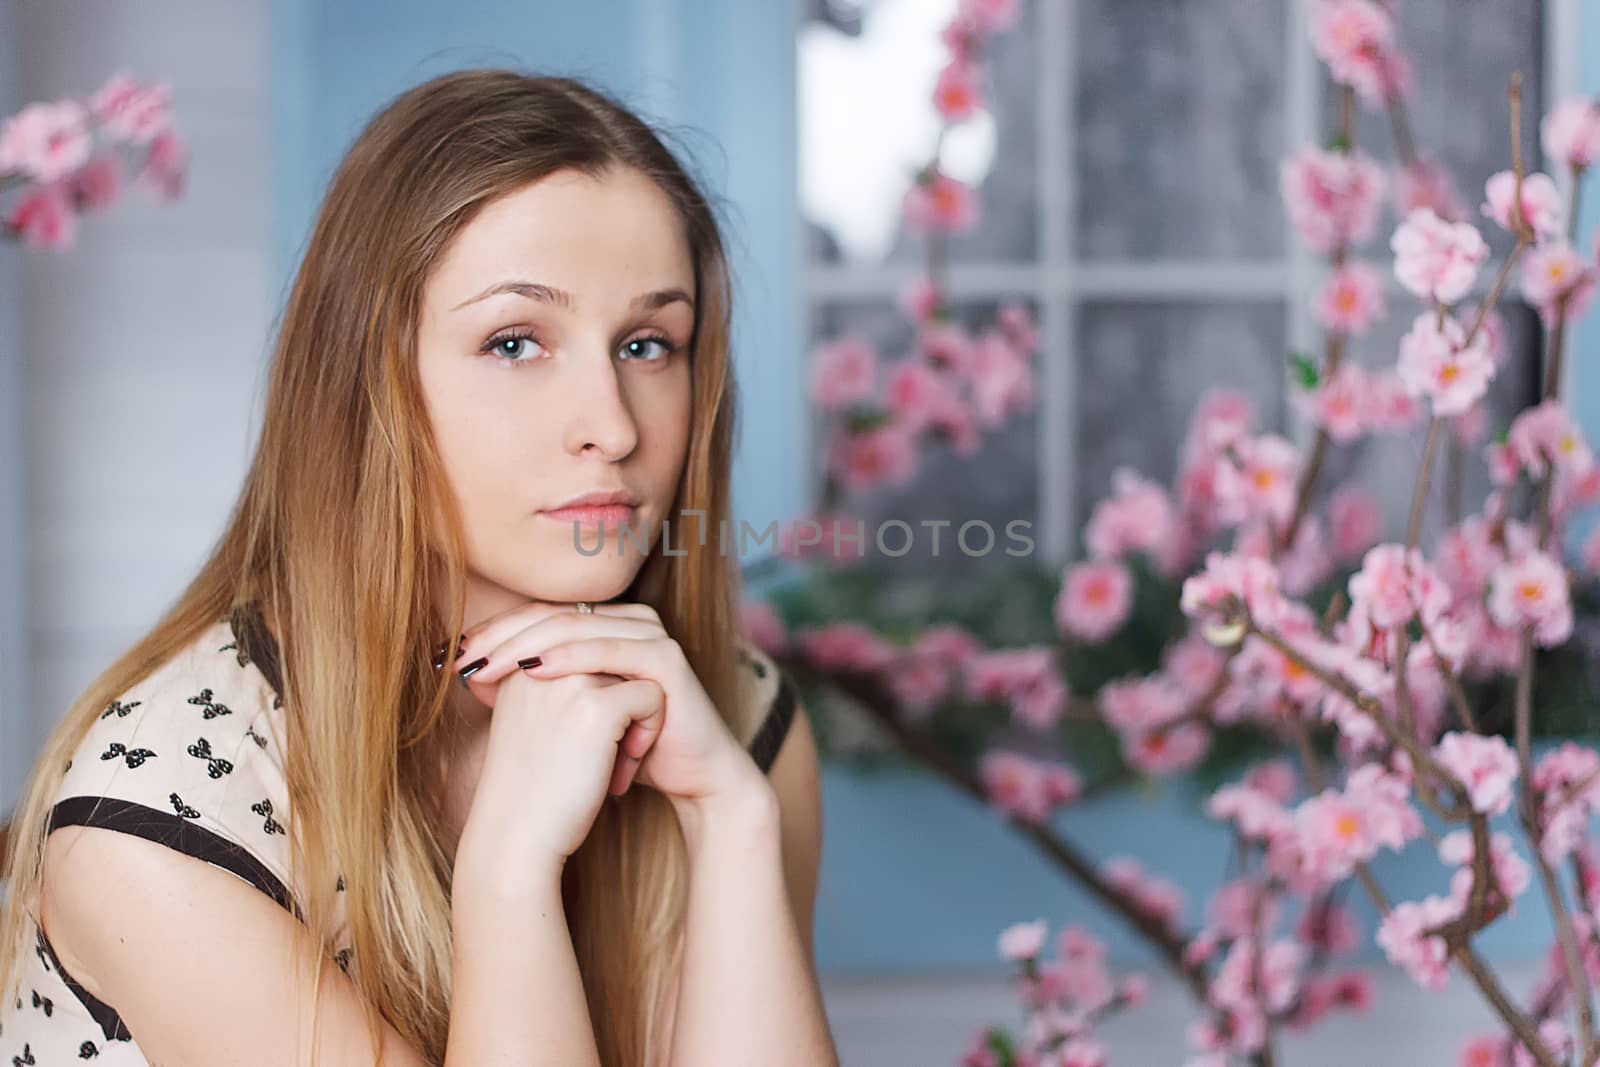 Beautiful girl with long hair in a flowering garden